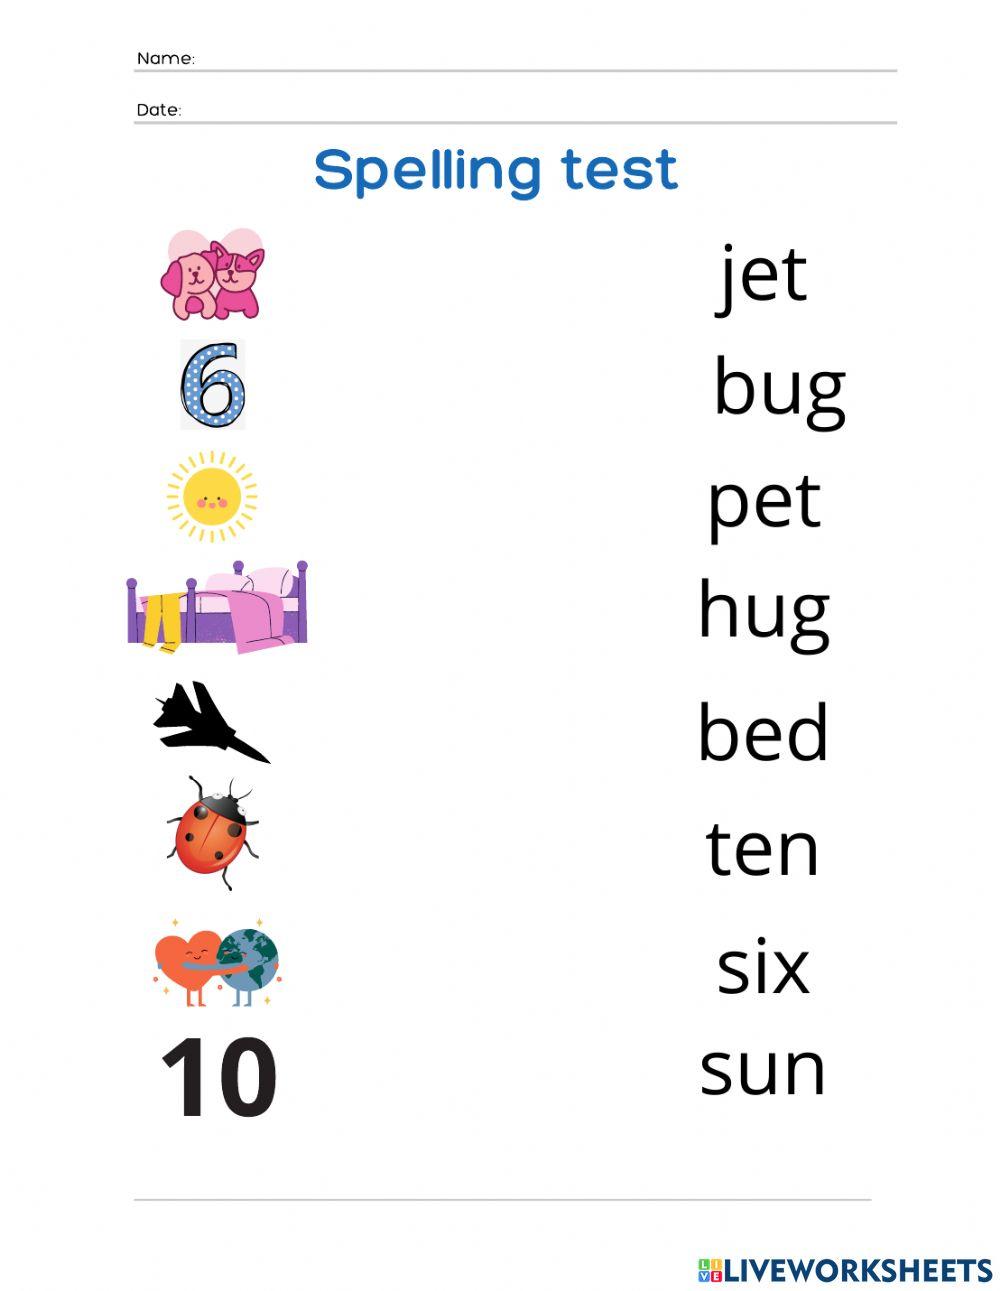 Match Spelling words